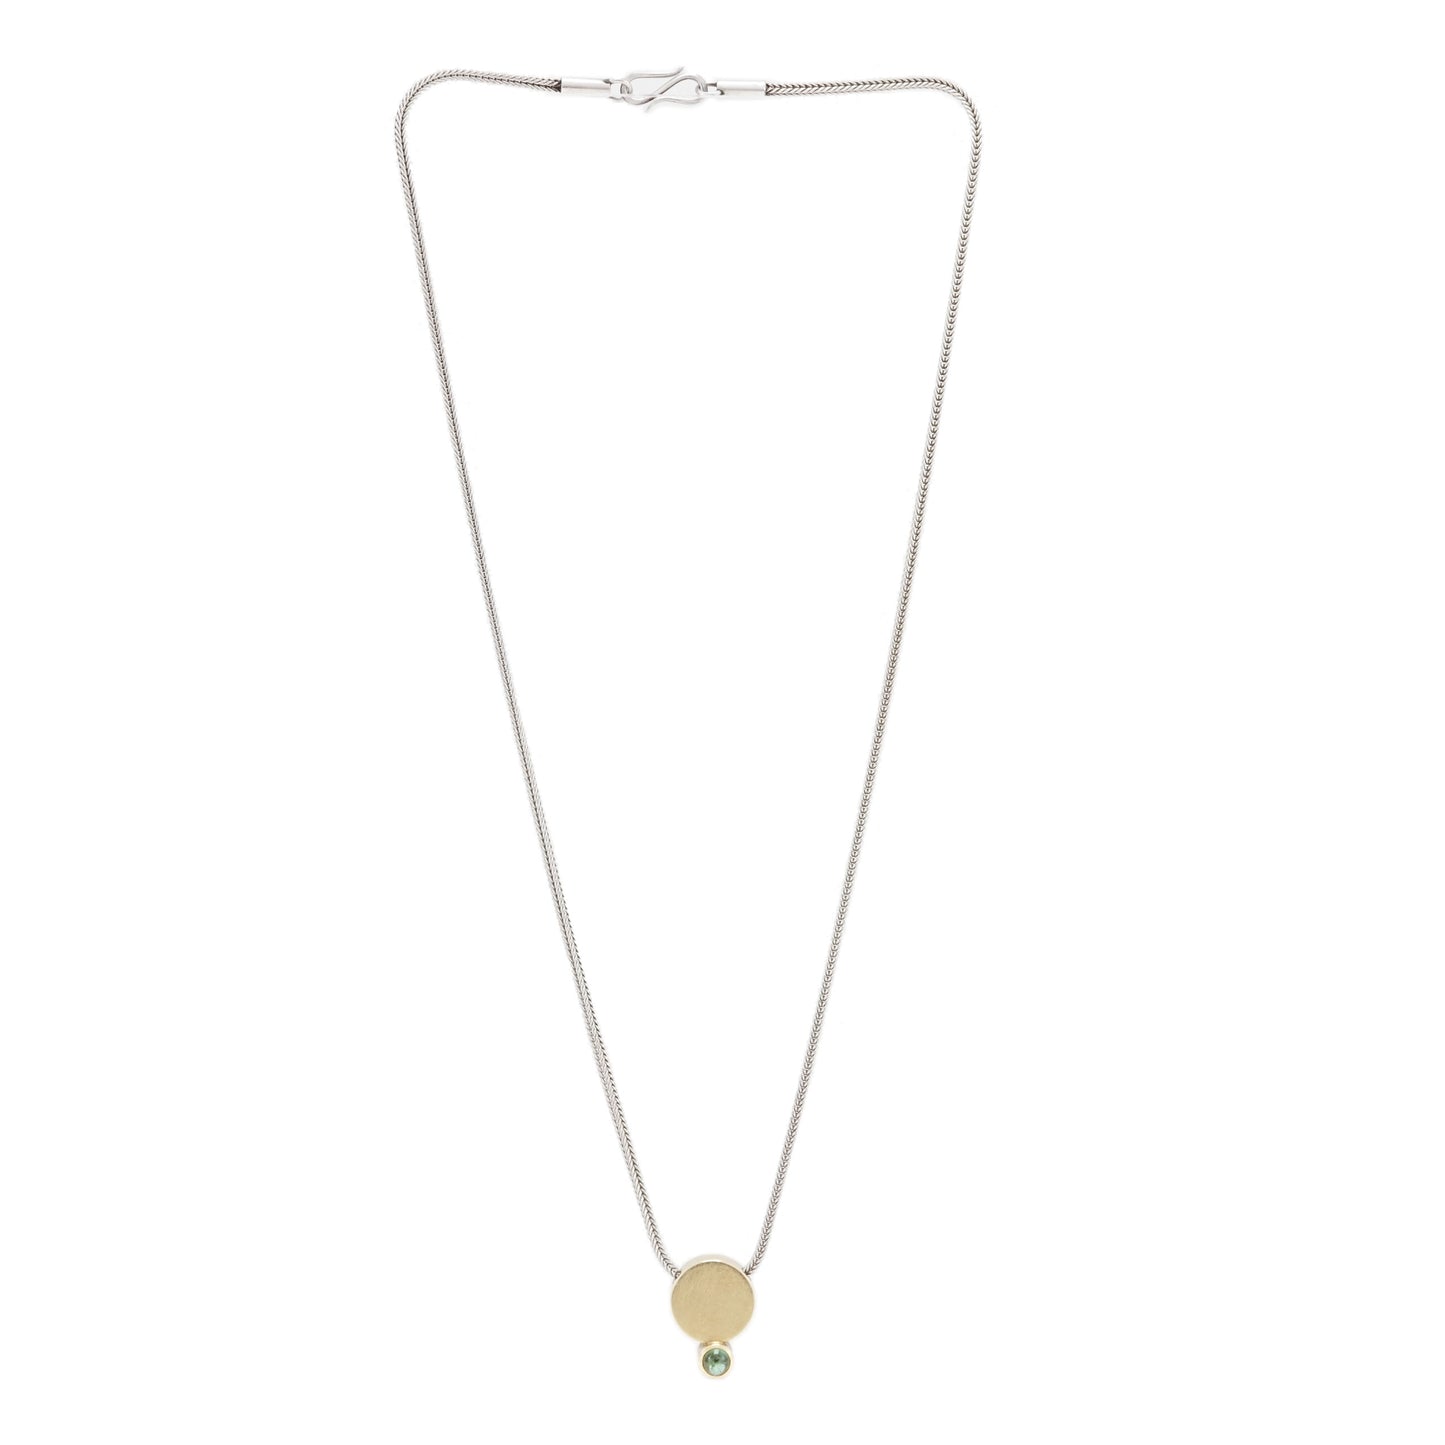 Pendant yellow gold 18K tourmaline women's jewelry silver chain foxtail 925 47cm